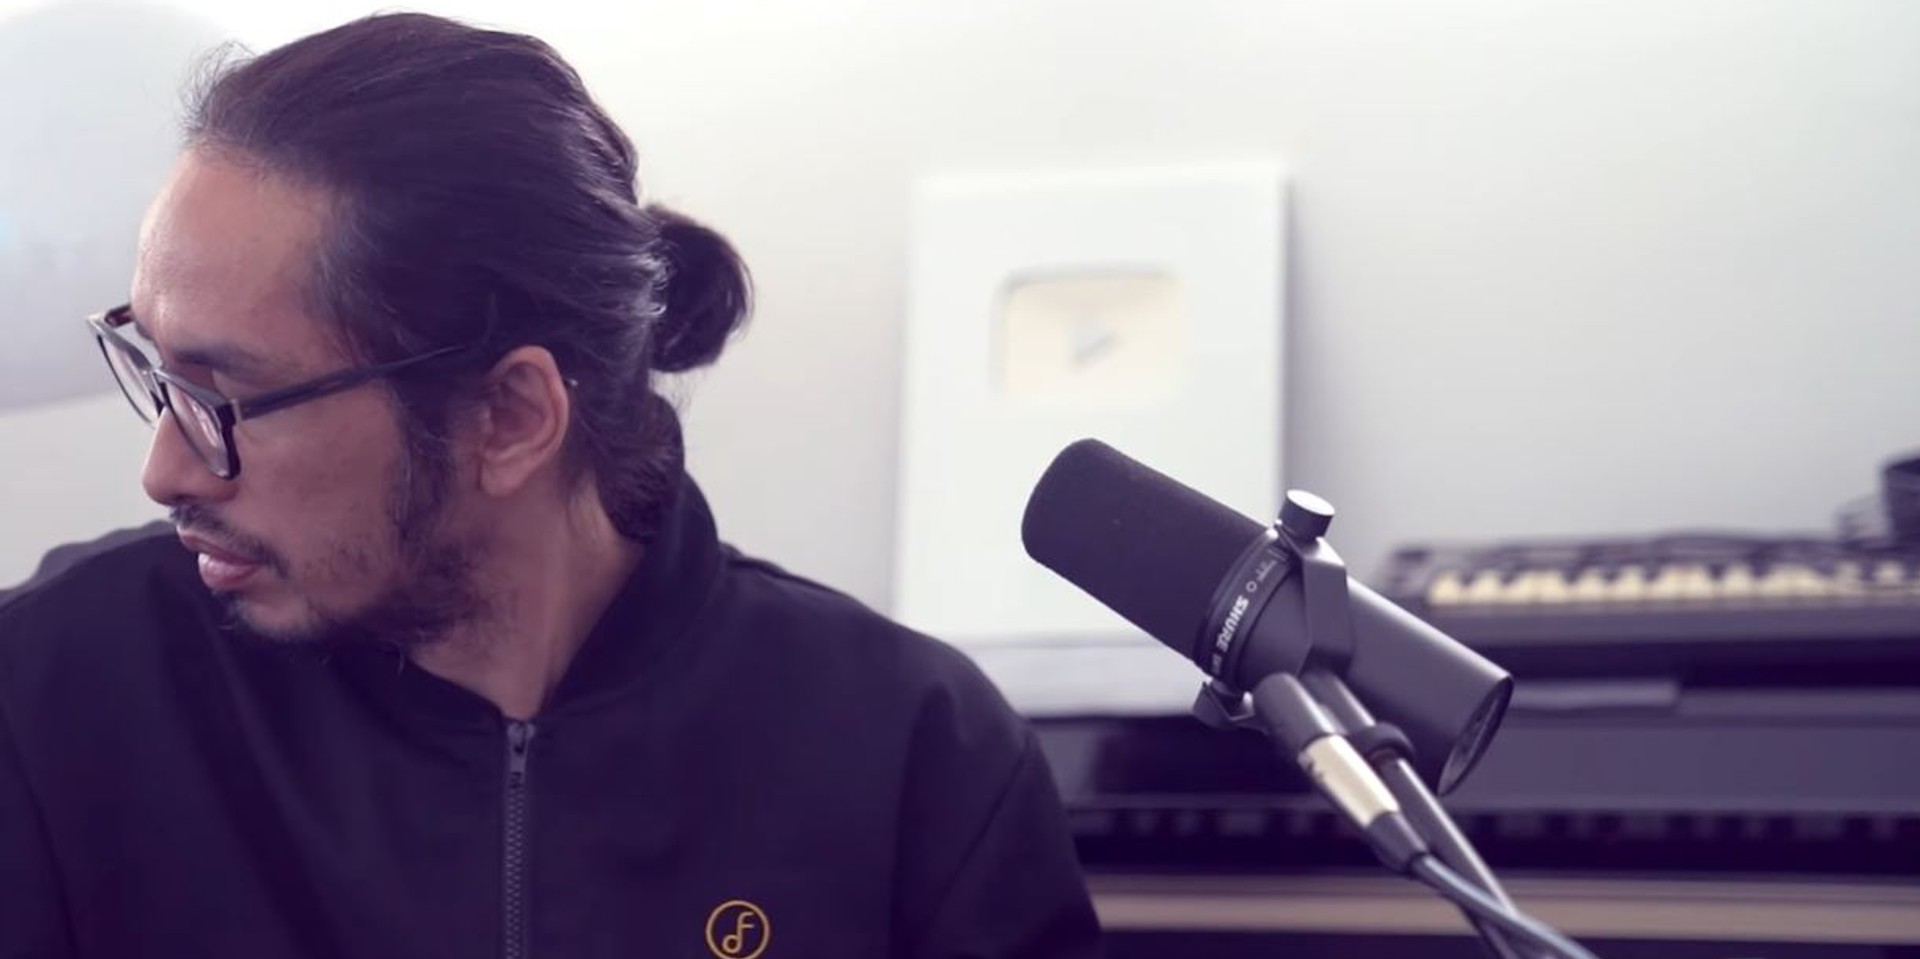 Rico Blanco releases live studio video of Joyce Pring, Never the Strangers collab 'Baka Sakali' – watch